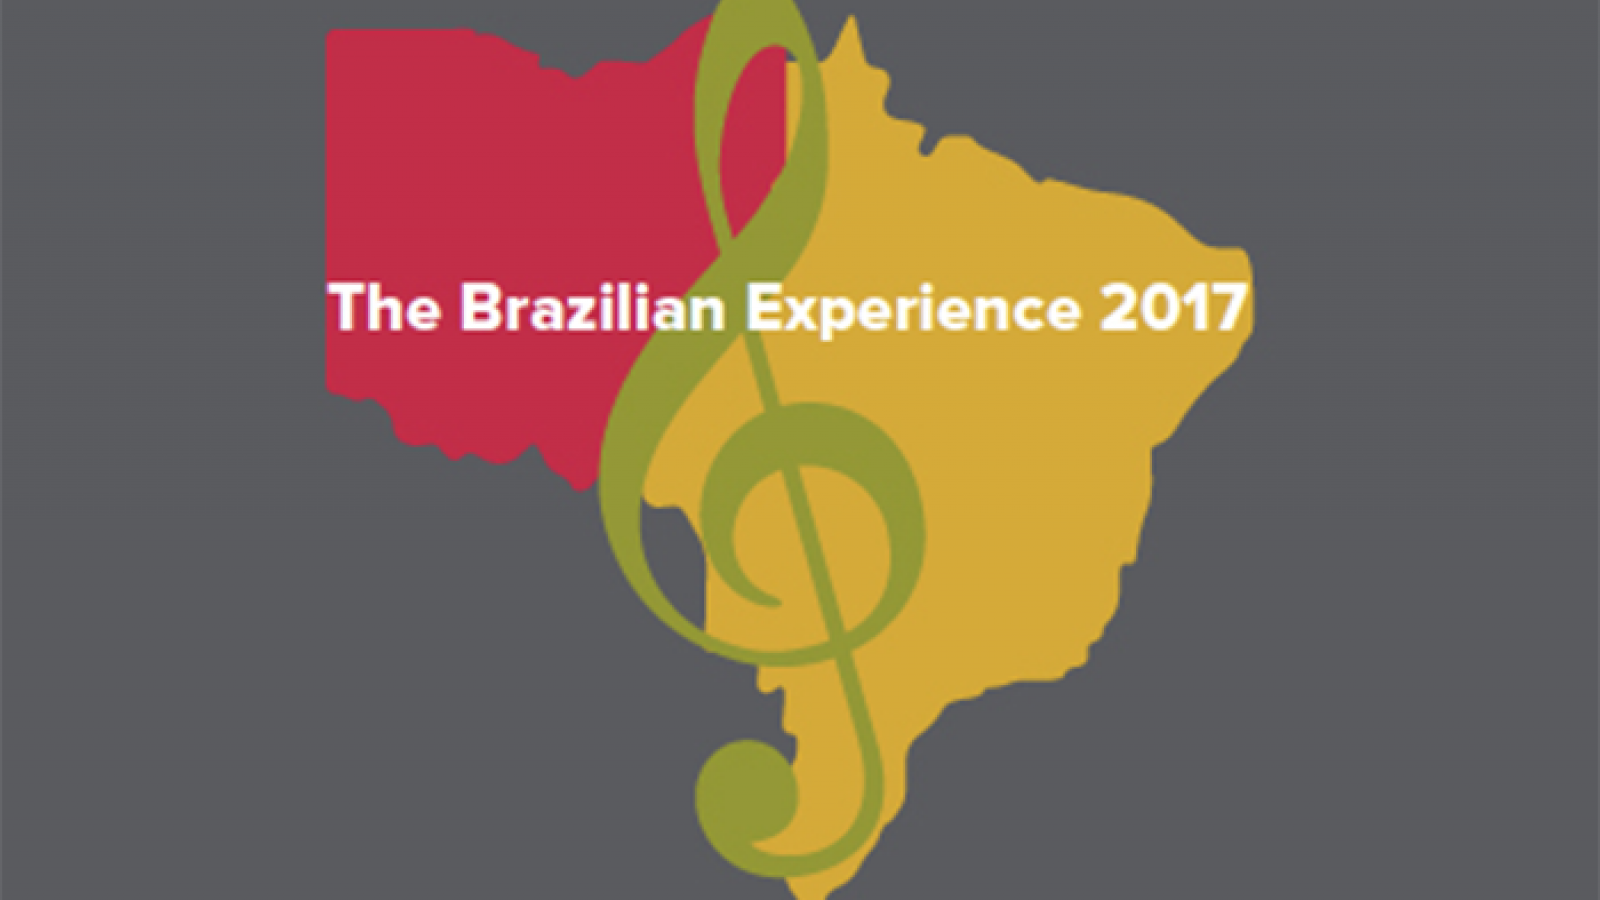 The Brazilian Experience 2017 logo